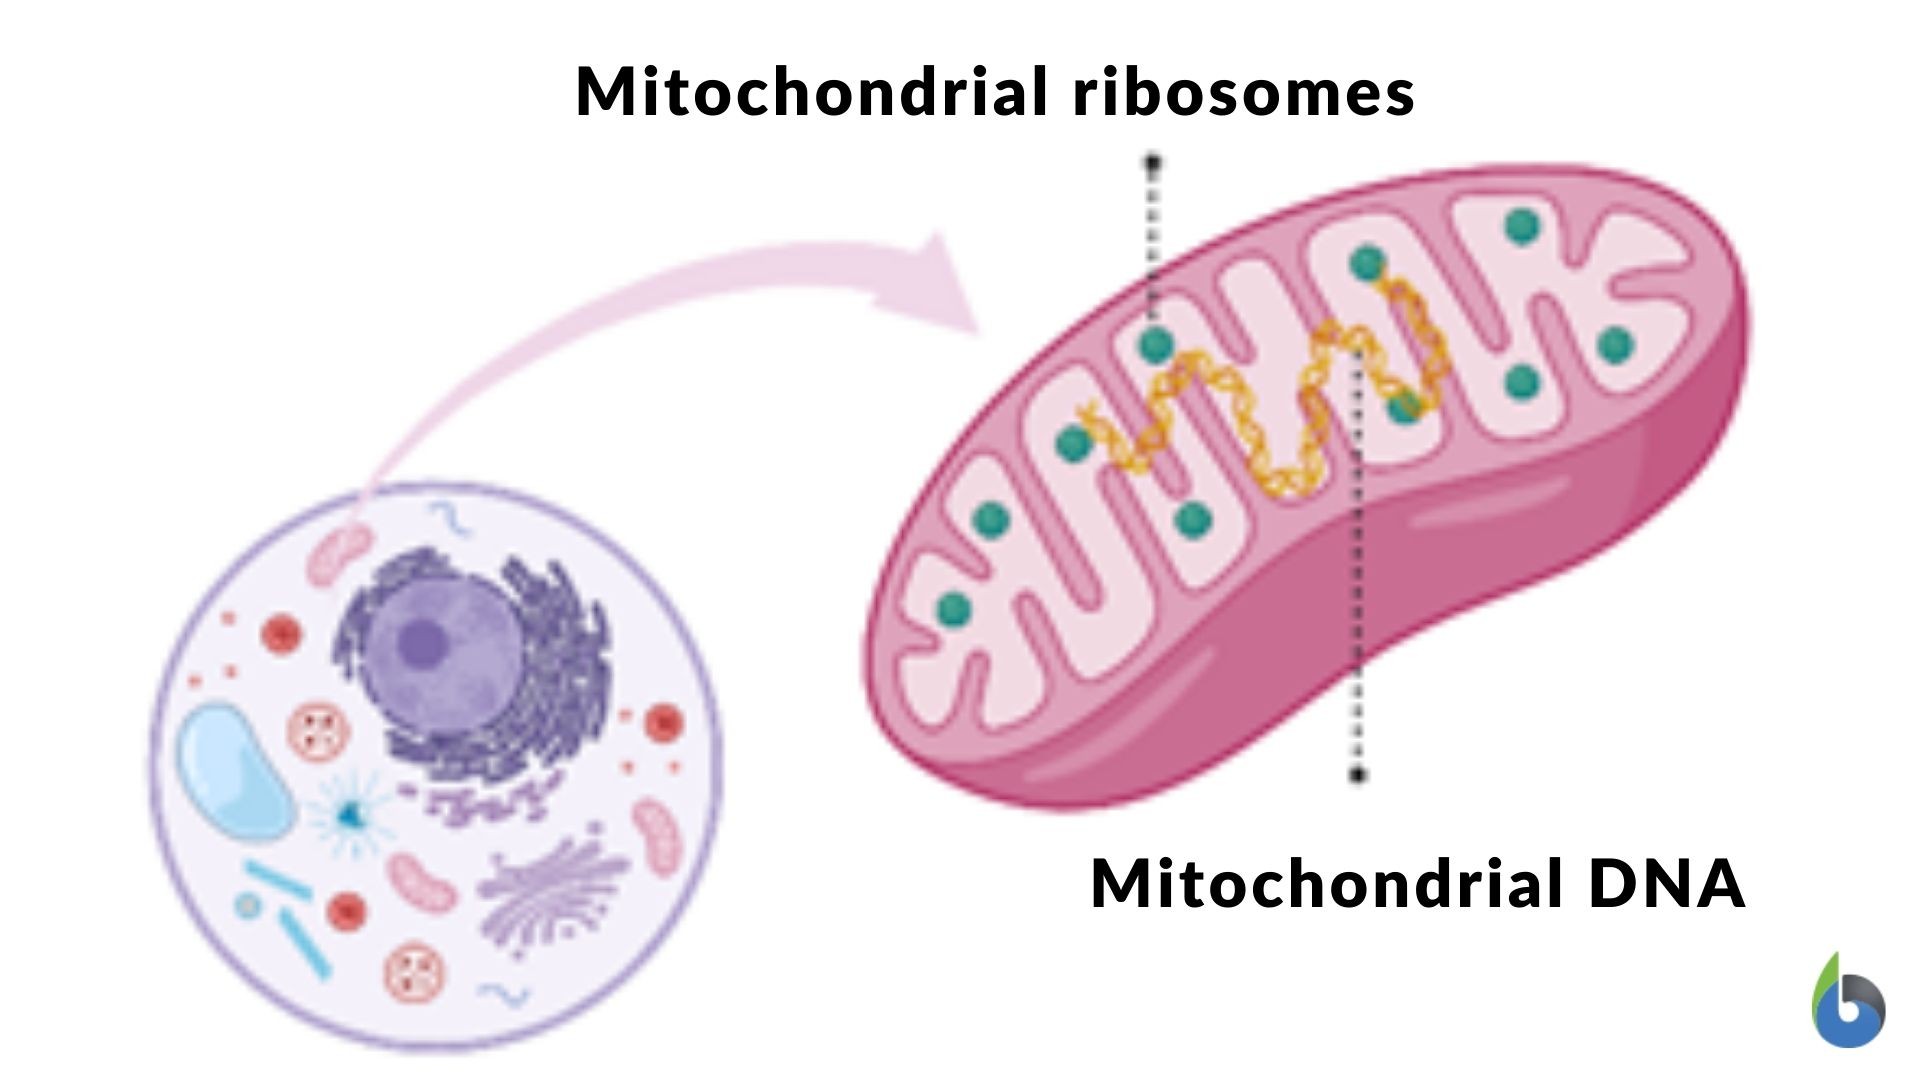 Figure 3: Location of mitochondrial ribosomes (image source: Dr Amita Joshi)